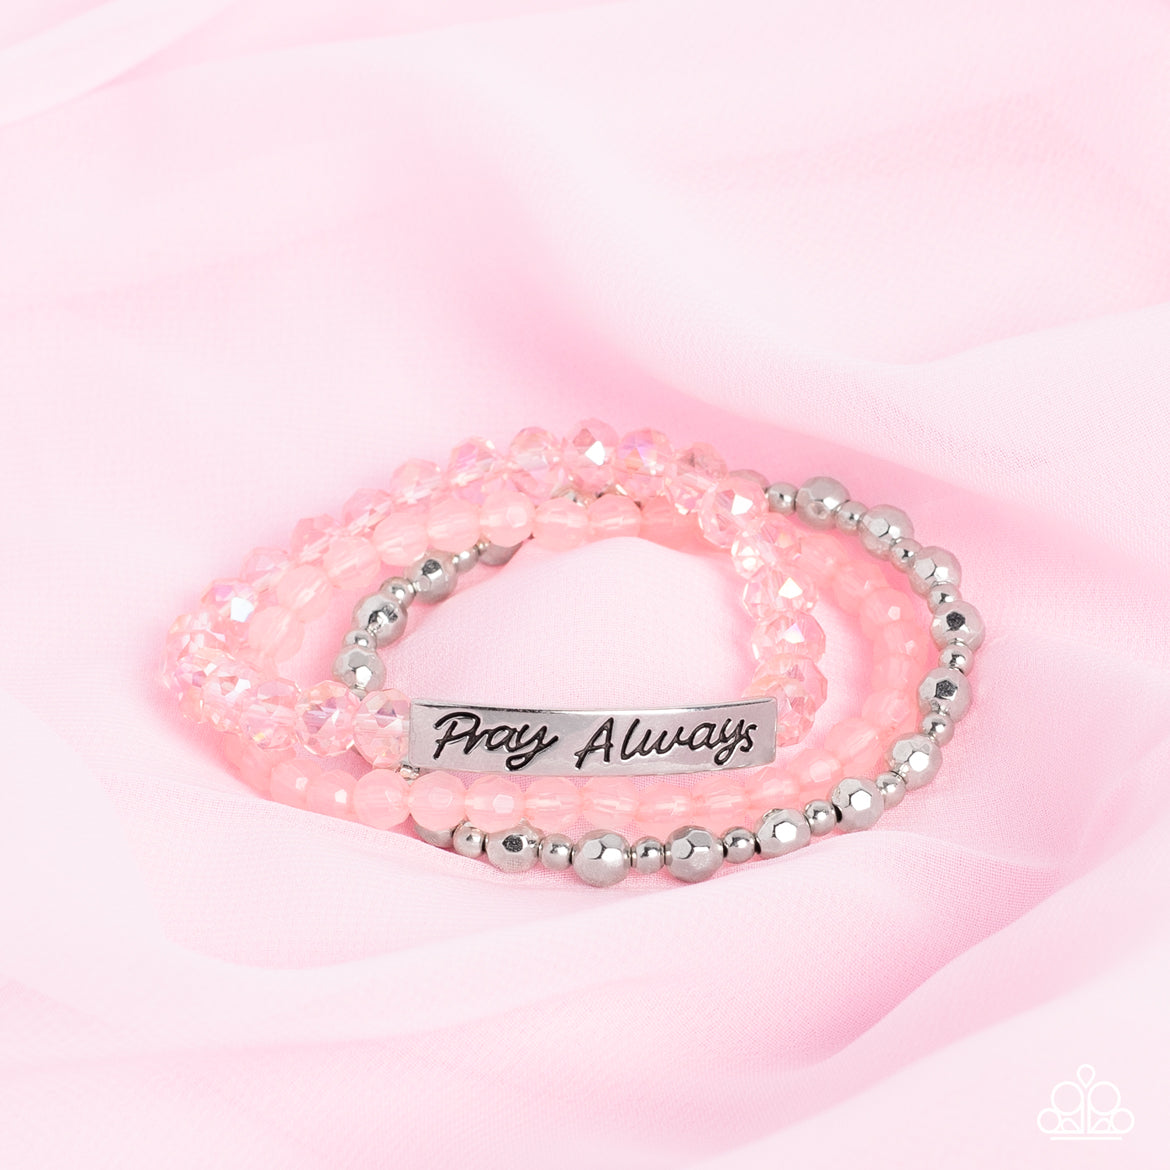 Pray Always - Pink - Gtdazzlequeen